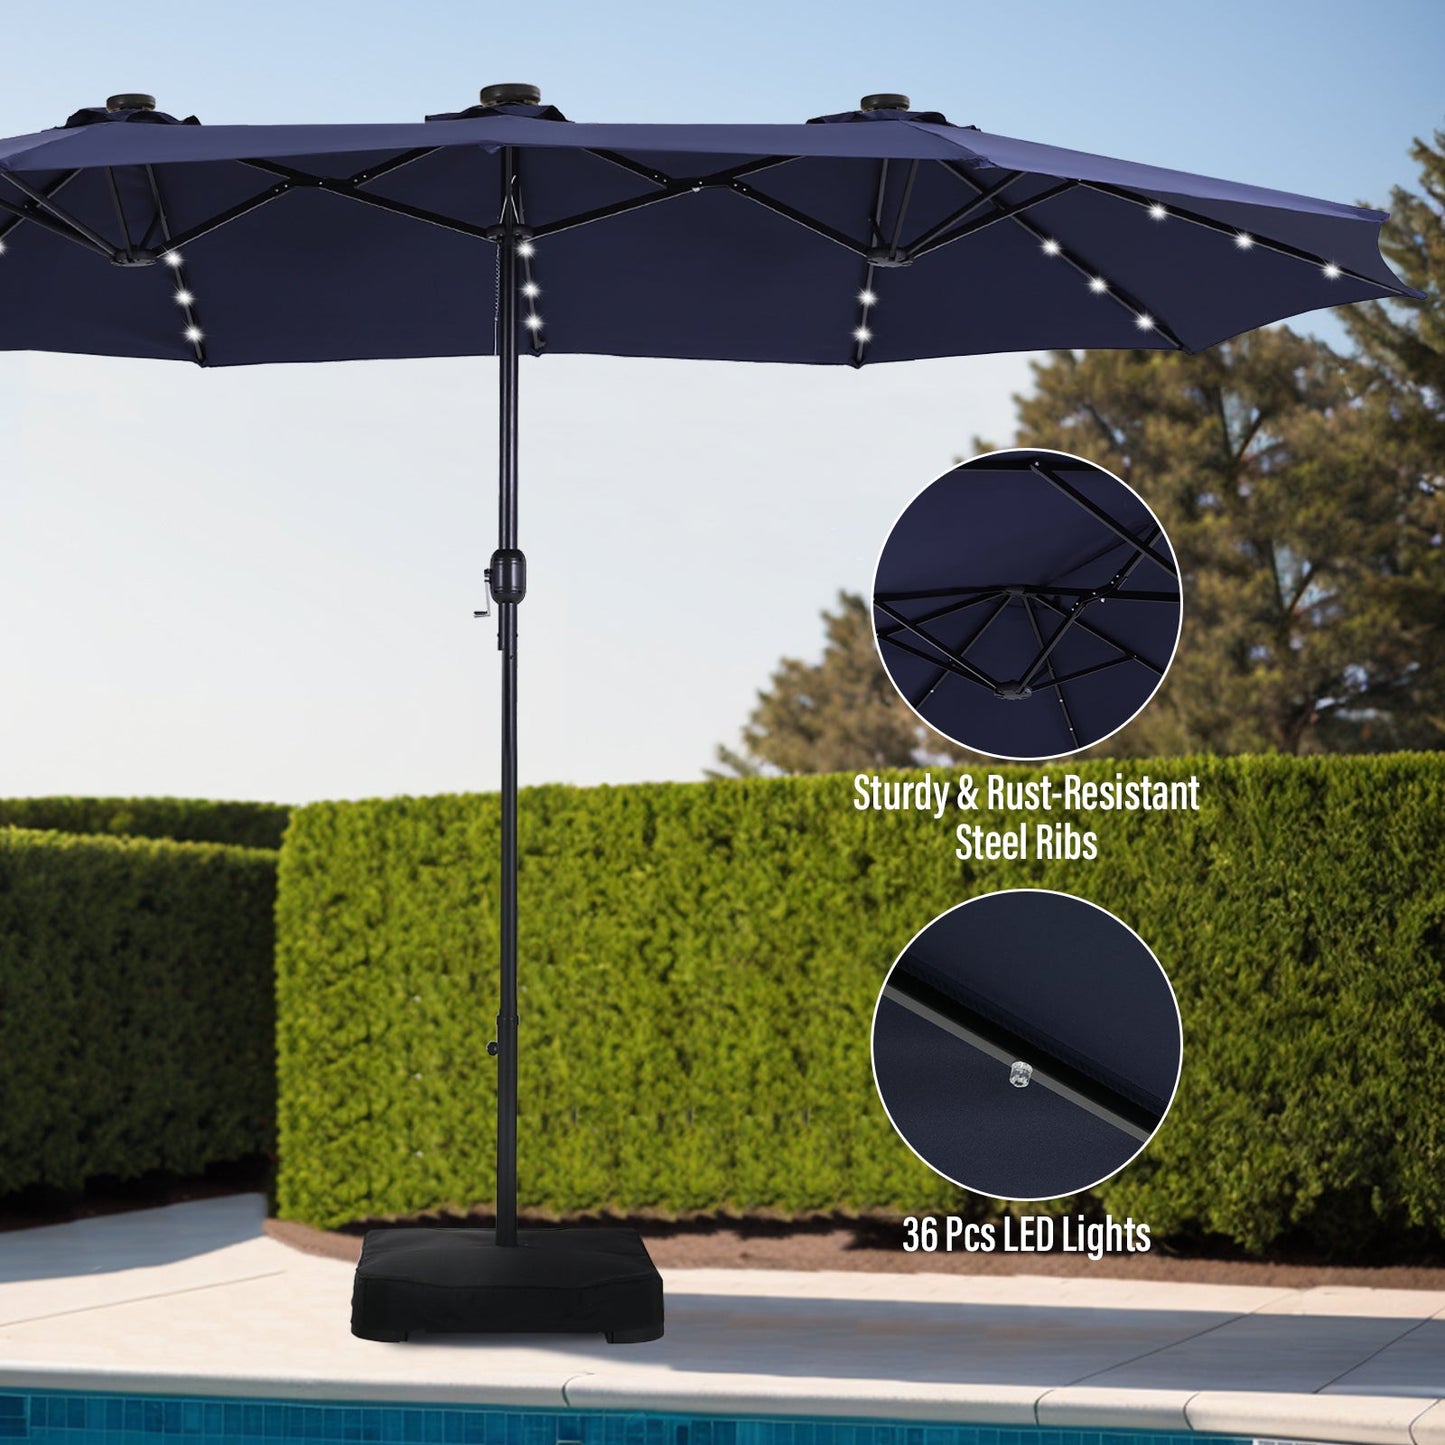 Sophia & William 15FT Outdoor Patio Umbrella Extra Large Double-Sided Garden Umbrella with Crank Handle Navy Blue